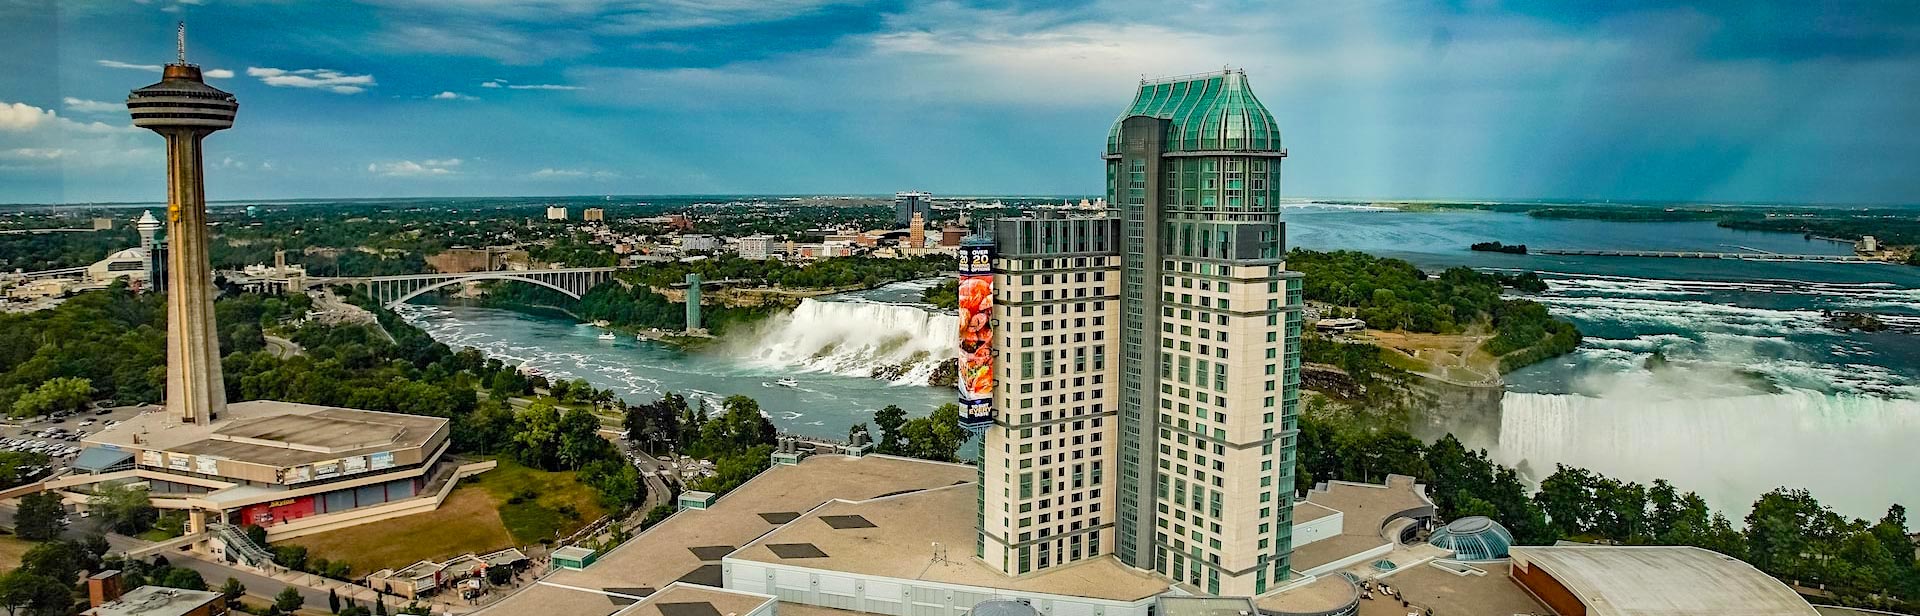 View of Niagara Falls from building.